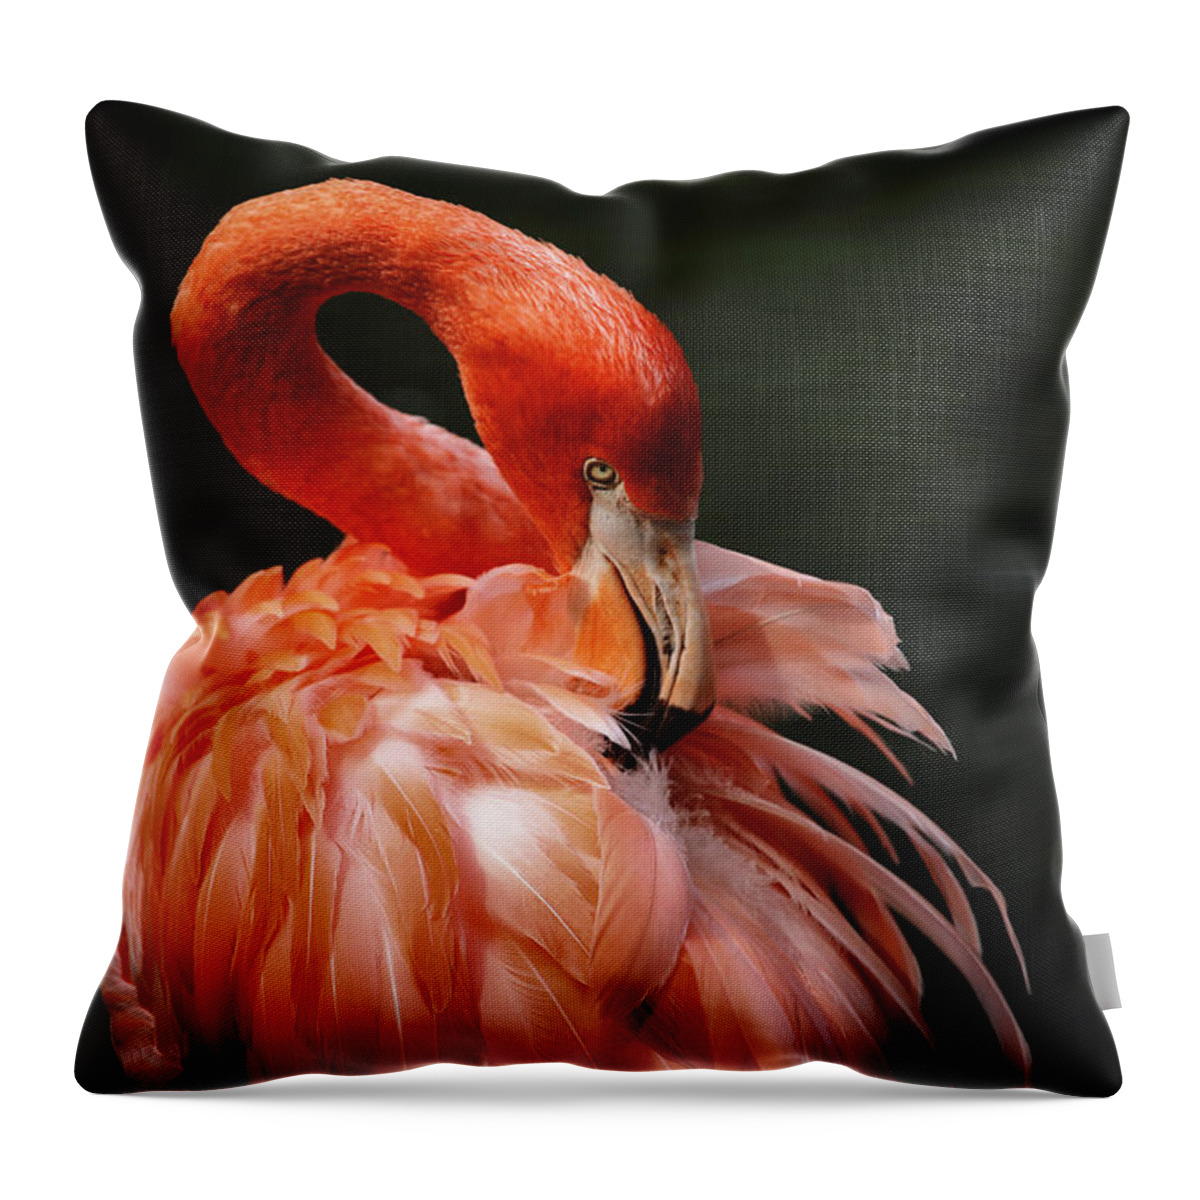 Flamingo Throw Pillow featuring the photograph Big Bird by Karol Livote